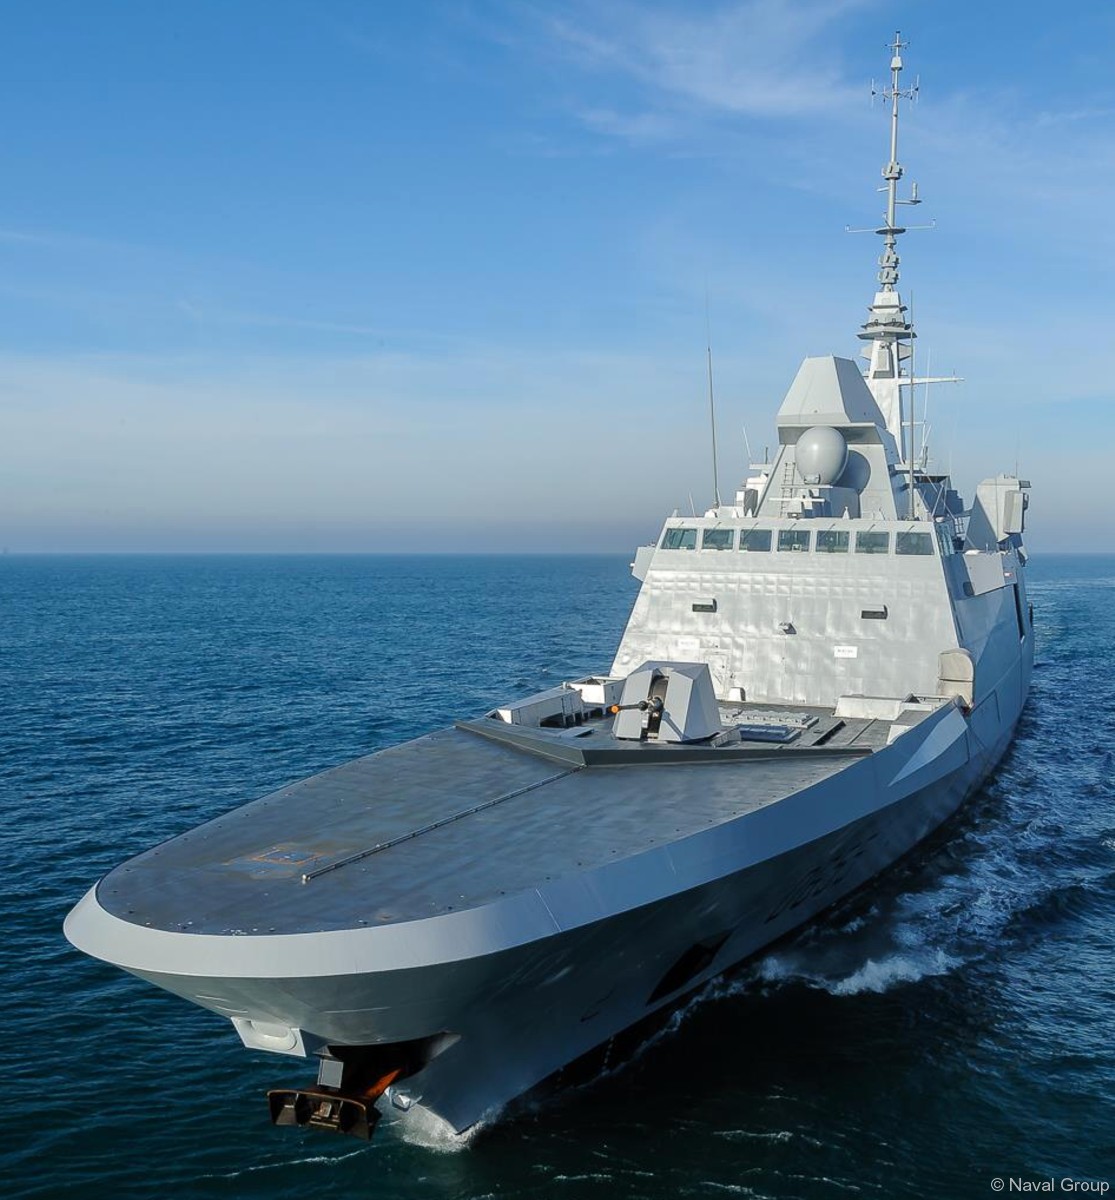 d-655 fs bretagne fremm aquitaine class frigate fregate multi purpose french navy marine nationale 13 sylver vls mdcn ssm cruise missile scalp